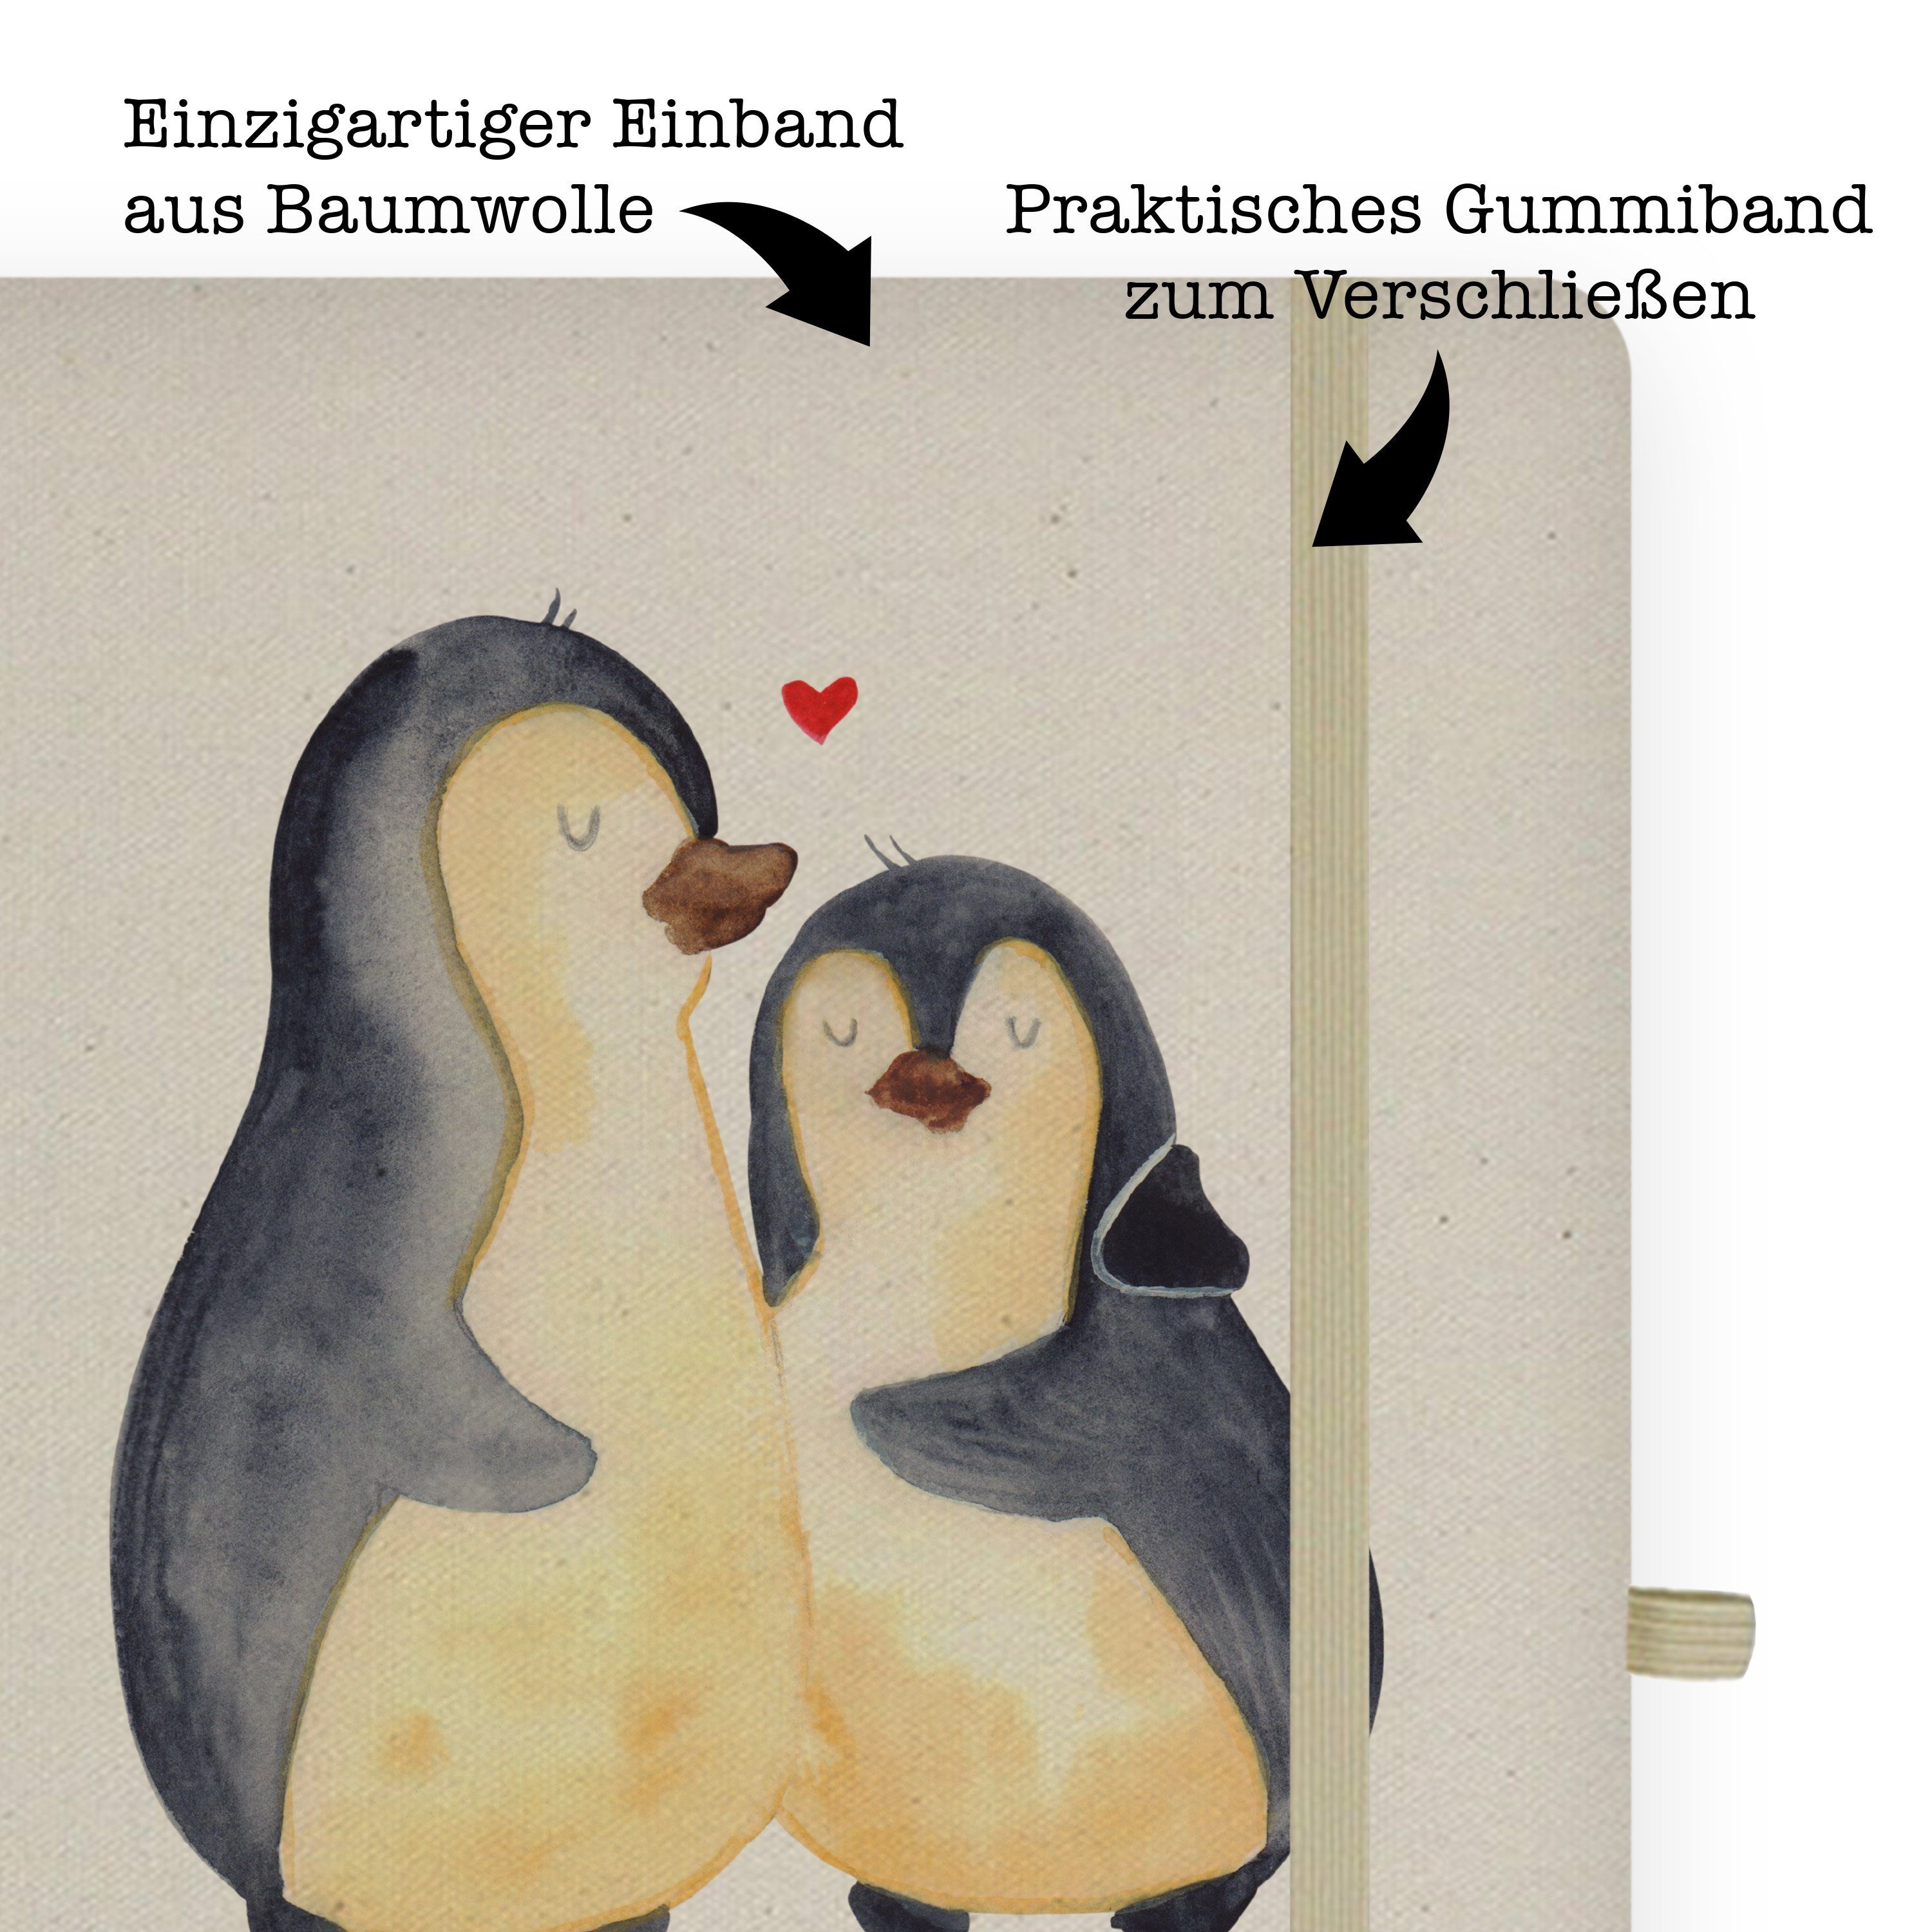 & umarmend Panda Mrs. Transparent Pinguin - Liebe, & Mr. Mr. - Mrs. Panda Hochzeitsgeschenk, Notizbuch Geschenk,